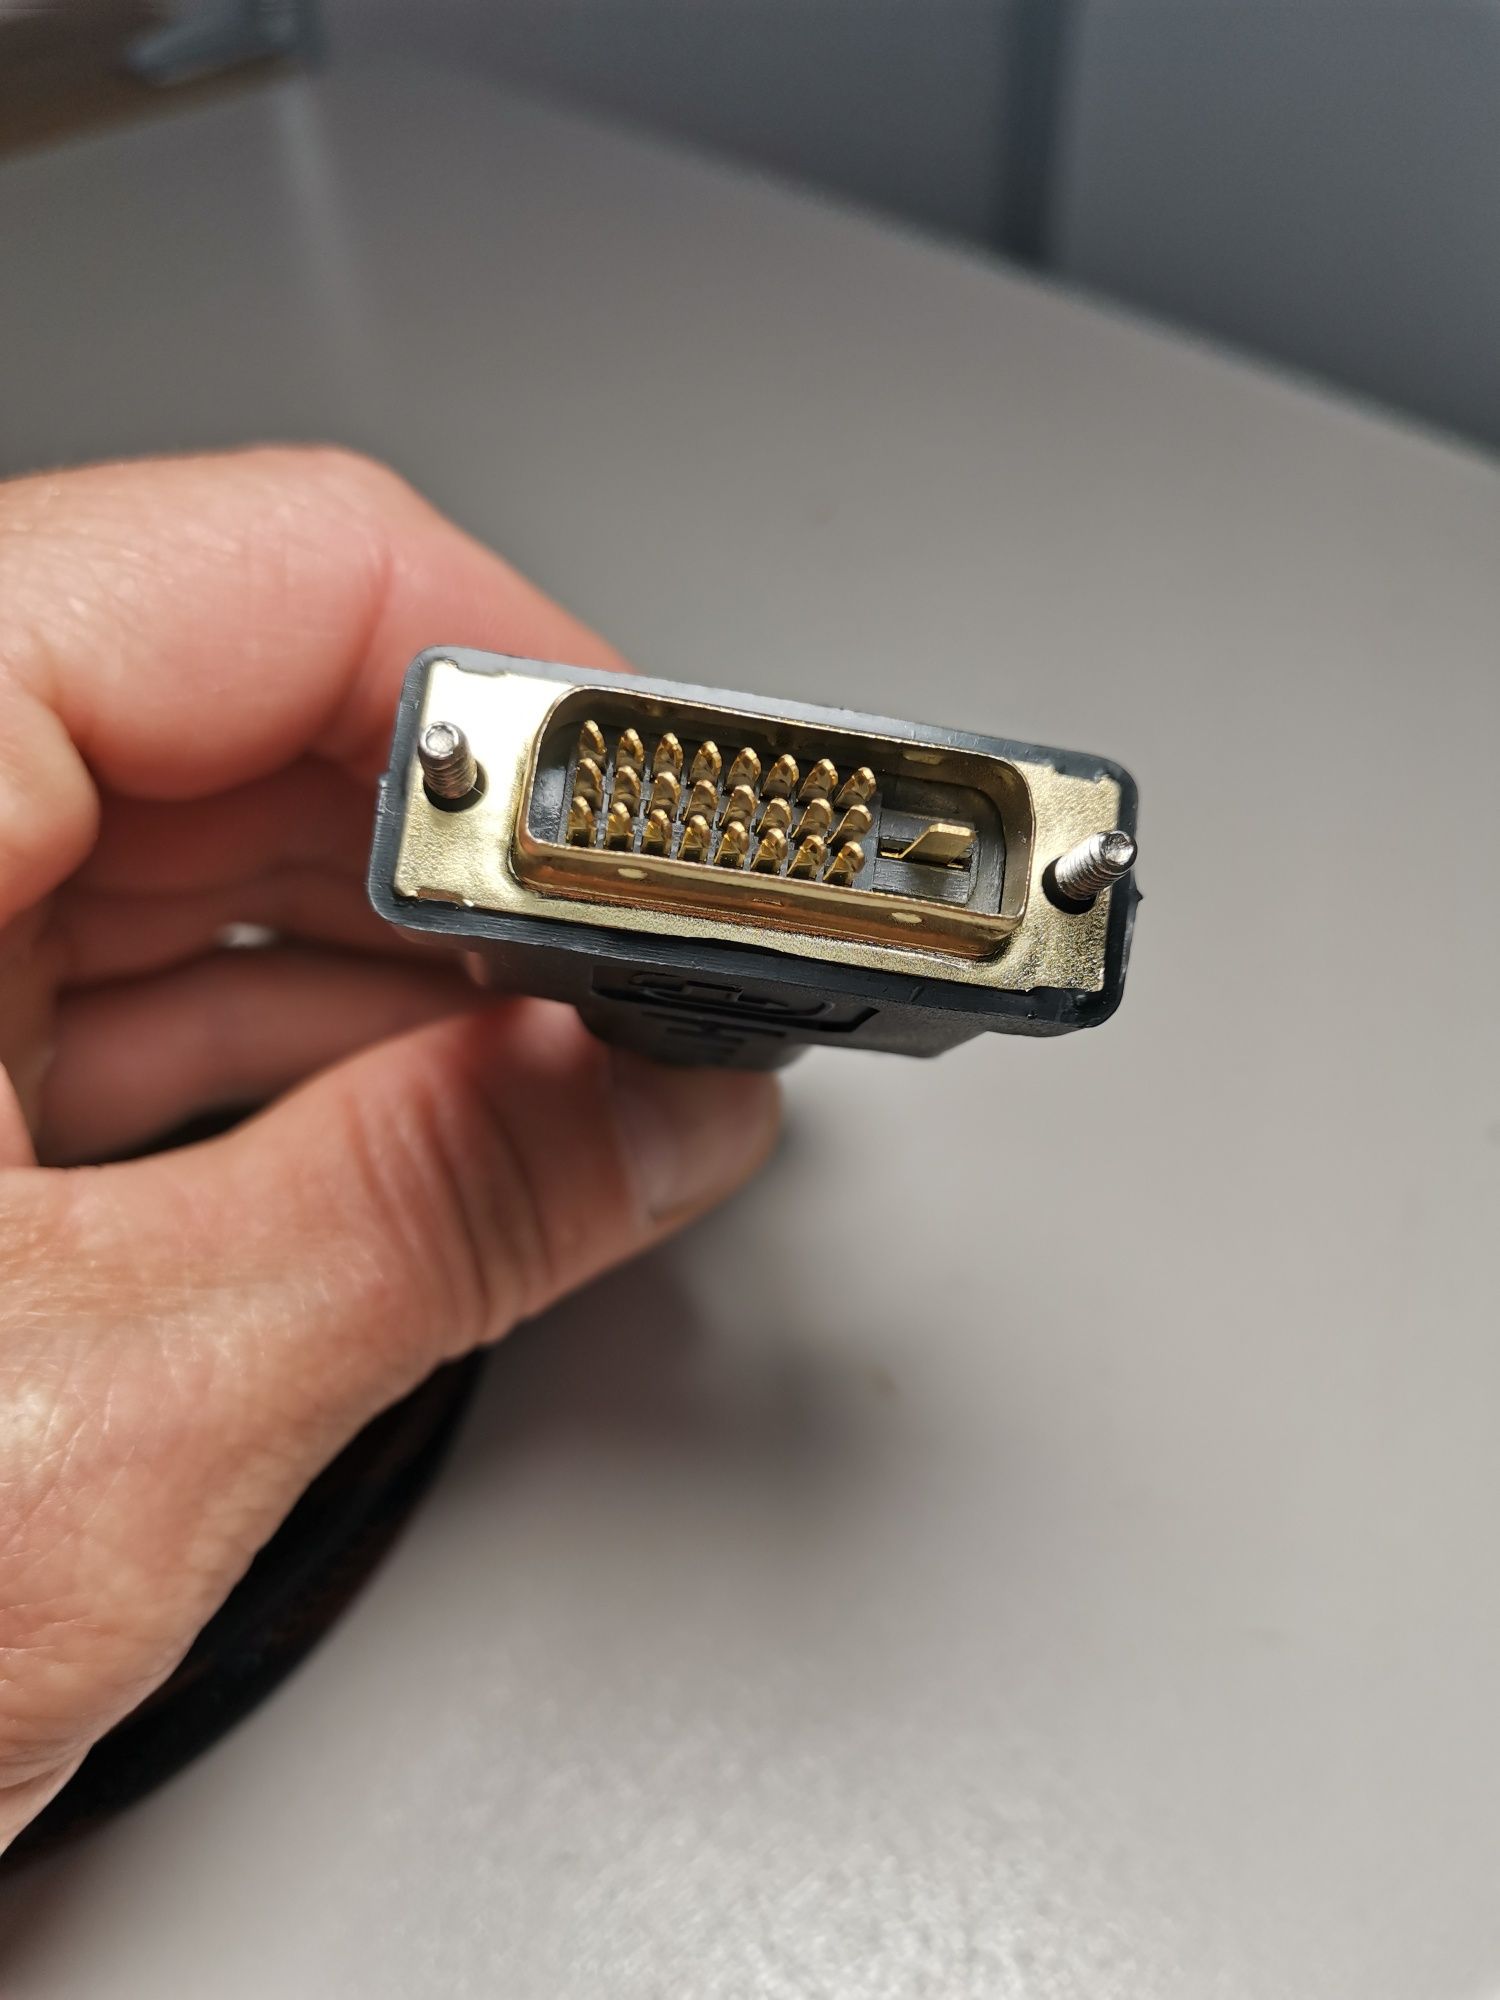 DVI to HDMI кабель переходник адаптер